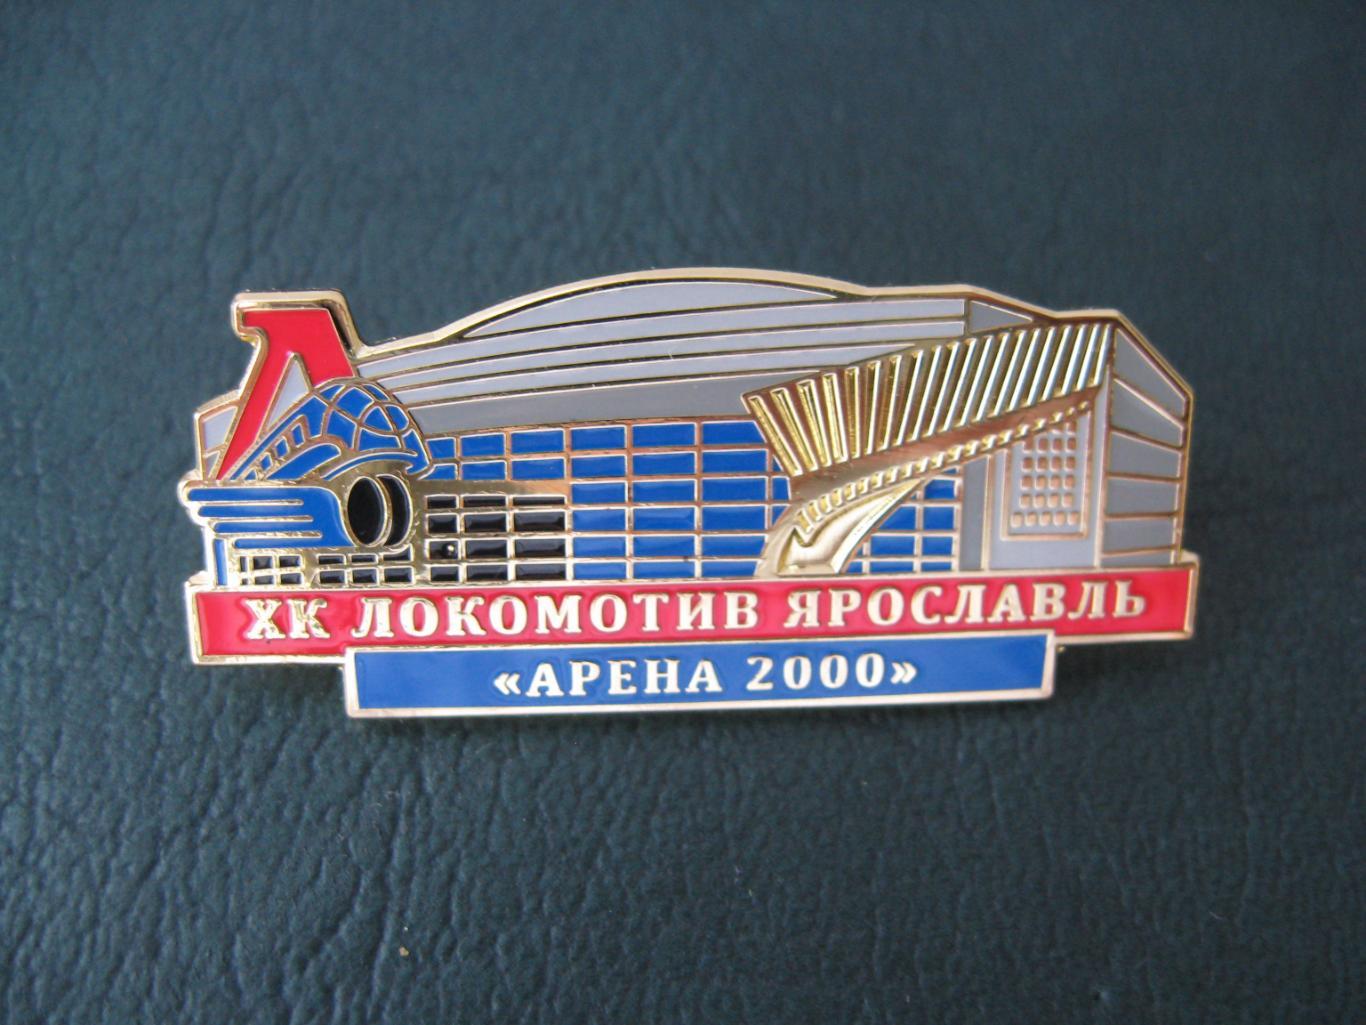 Значок ХК Локомотив ЯРОСЛАВЛЬ (Арена 2000)